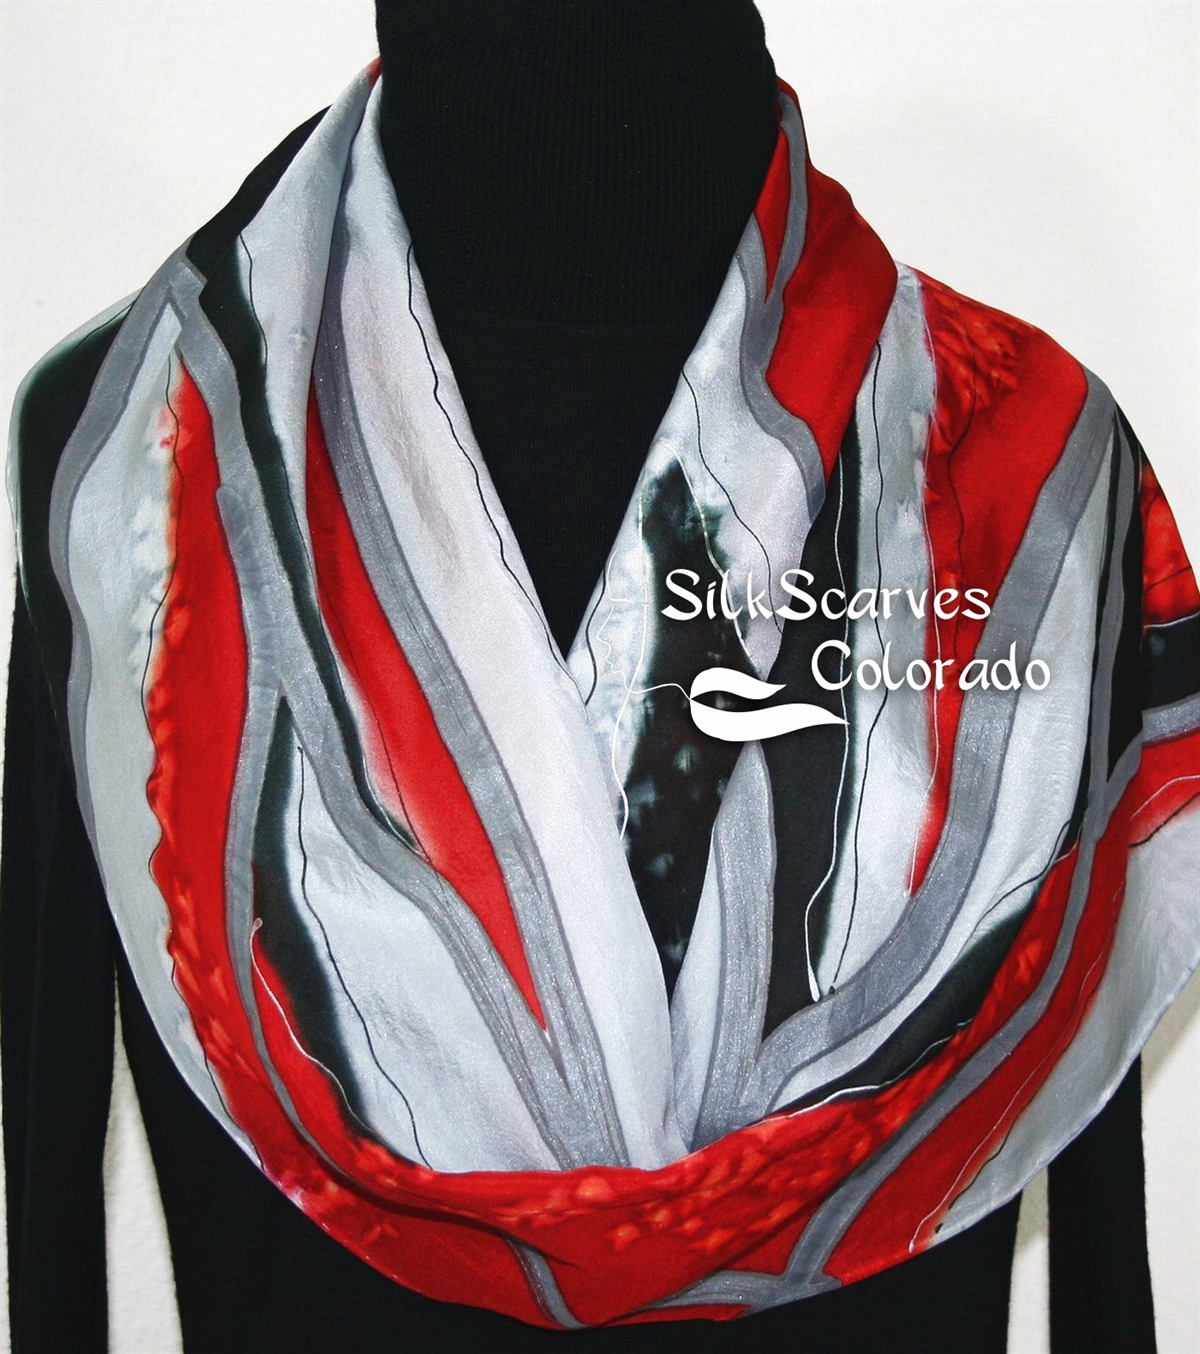 Silk Online Shop - Black, Grey, Red Painted Silk Scarf MOUNTAINS. Size 14x72. Silk Scarves Colorado. Birthday Gift